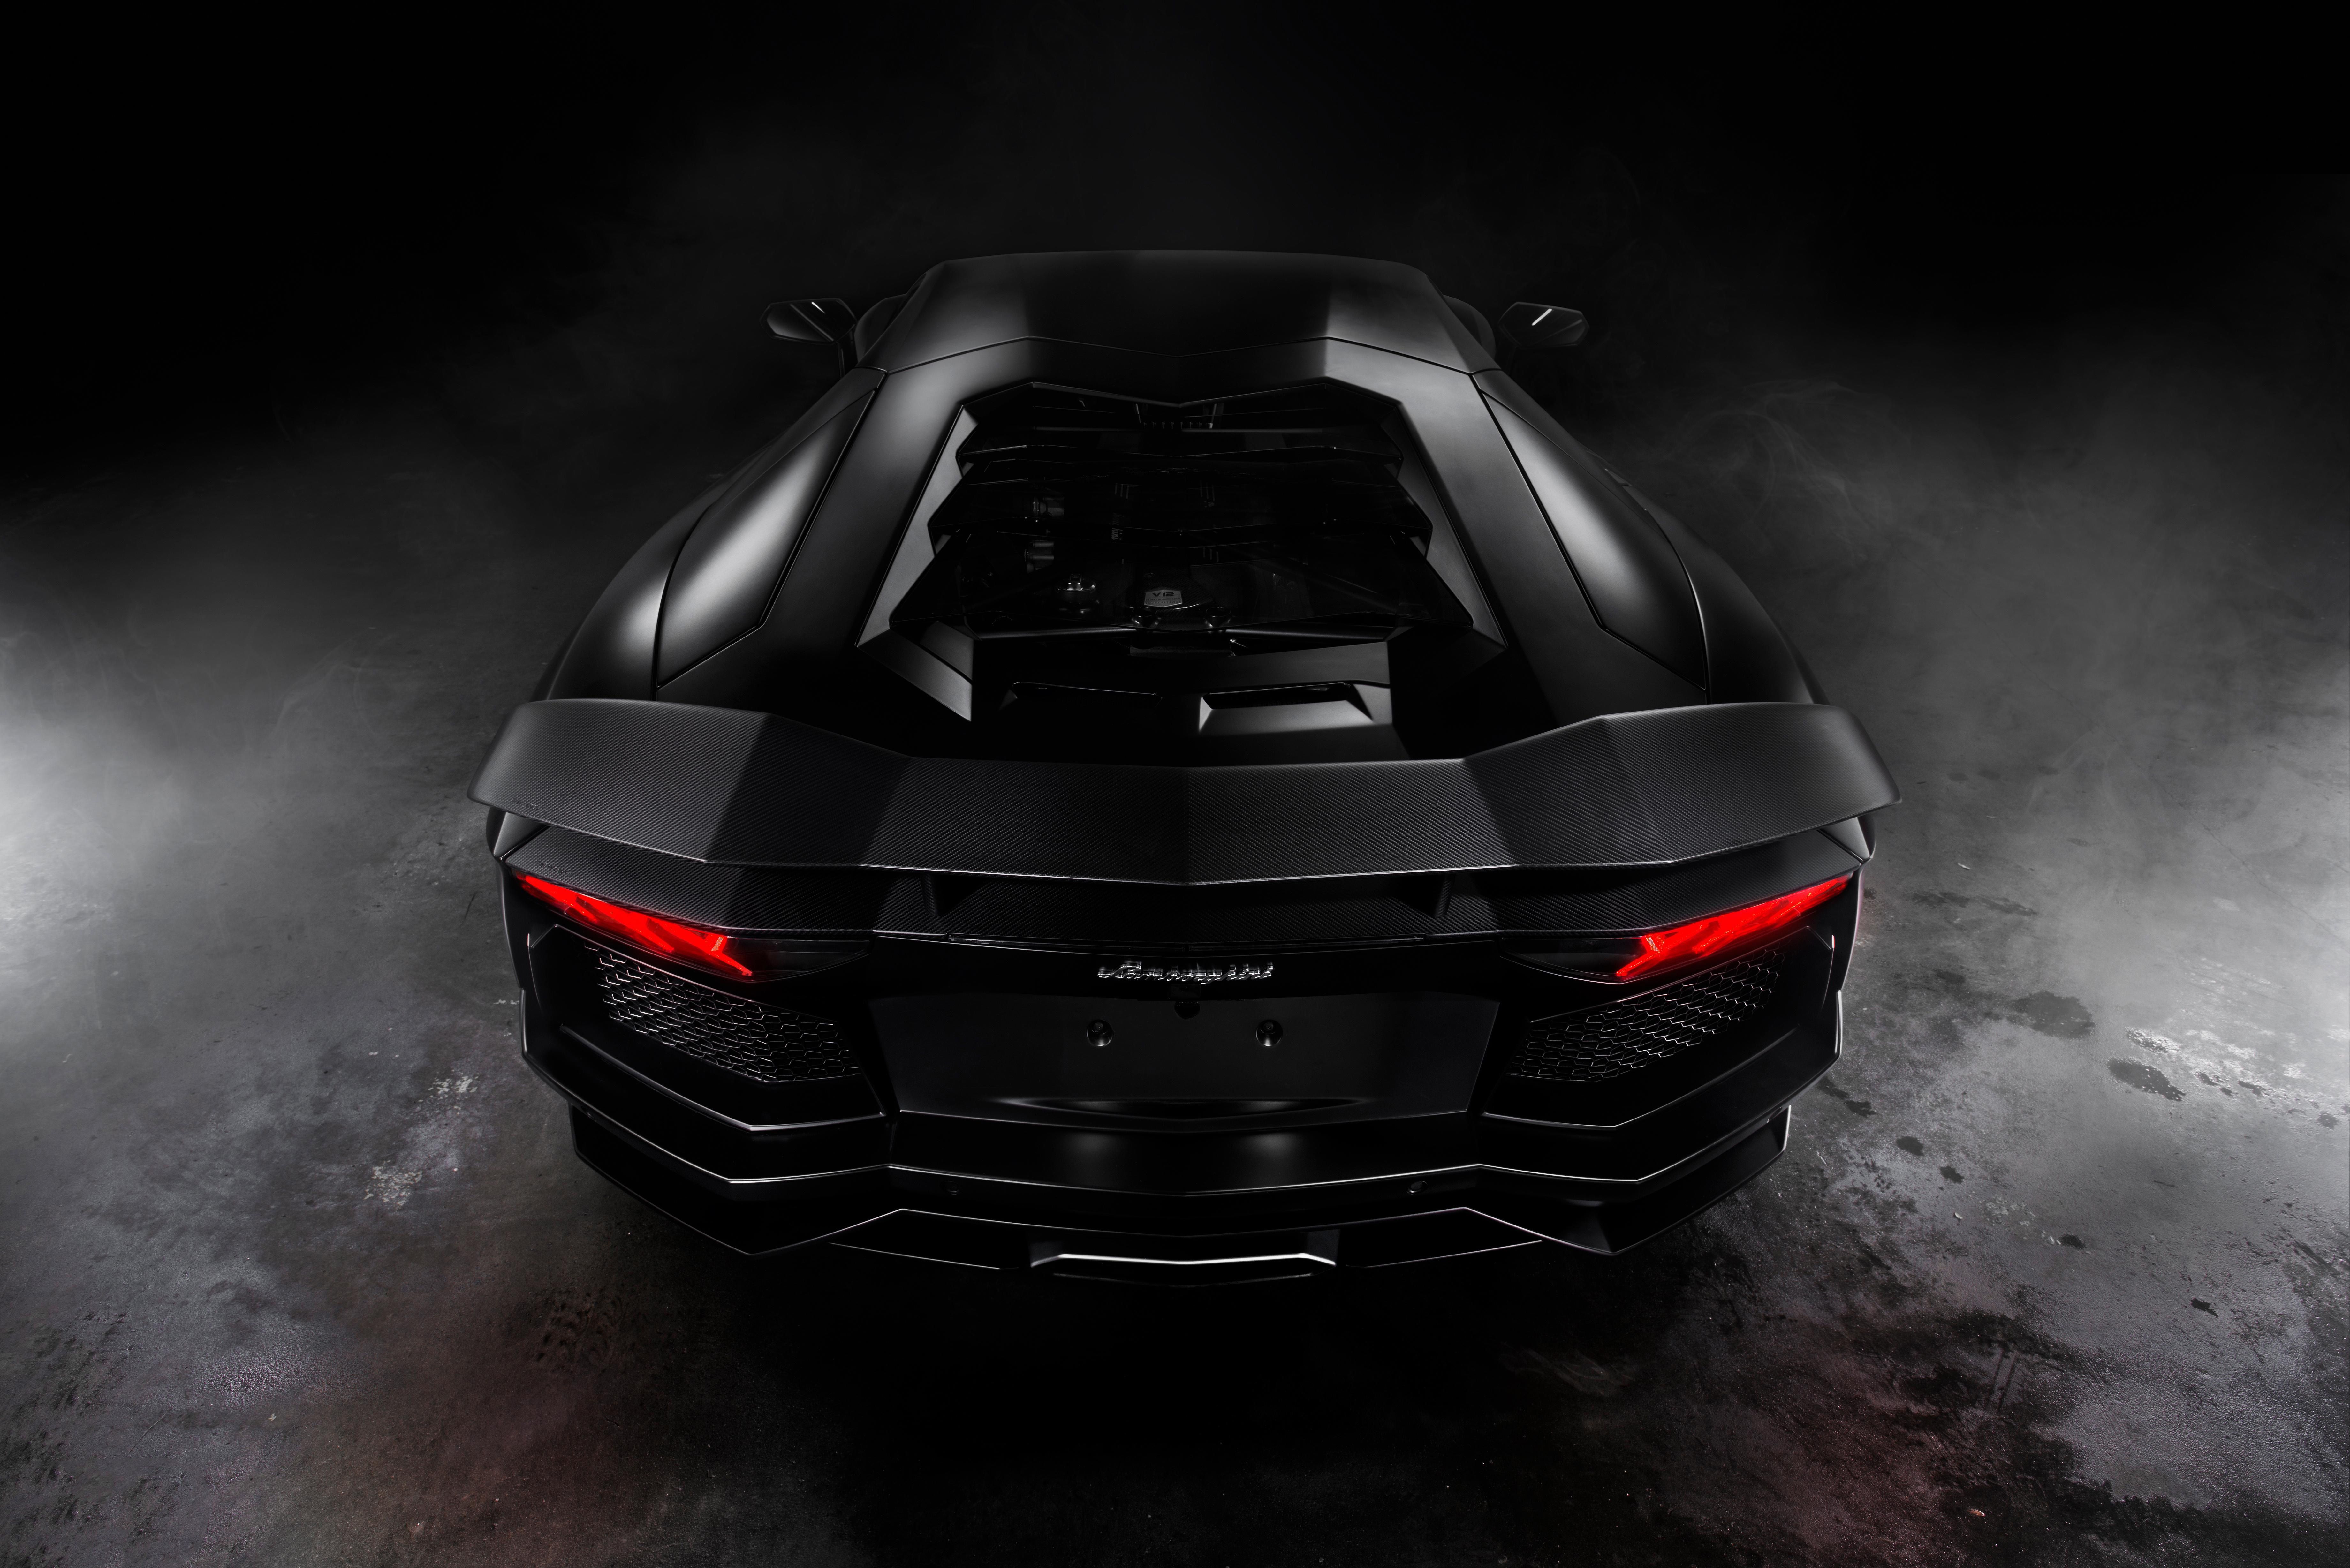 Black Lamborghini Aventador 8k, HD Cars, 4k Wallpaper, Image, Background, Photo and Picture